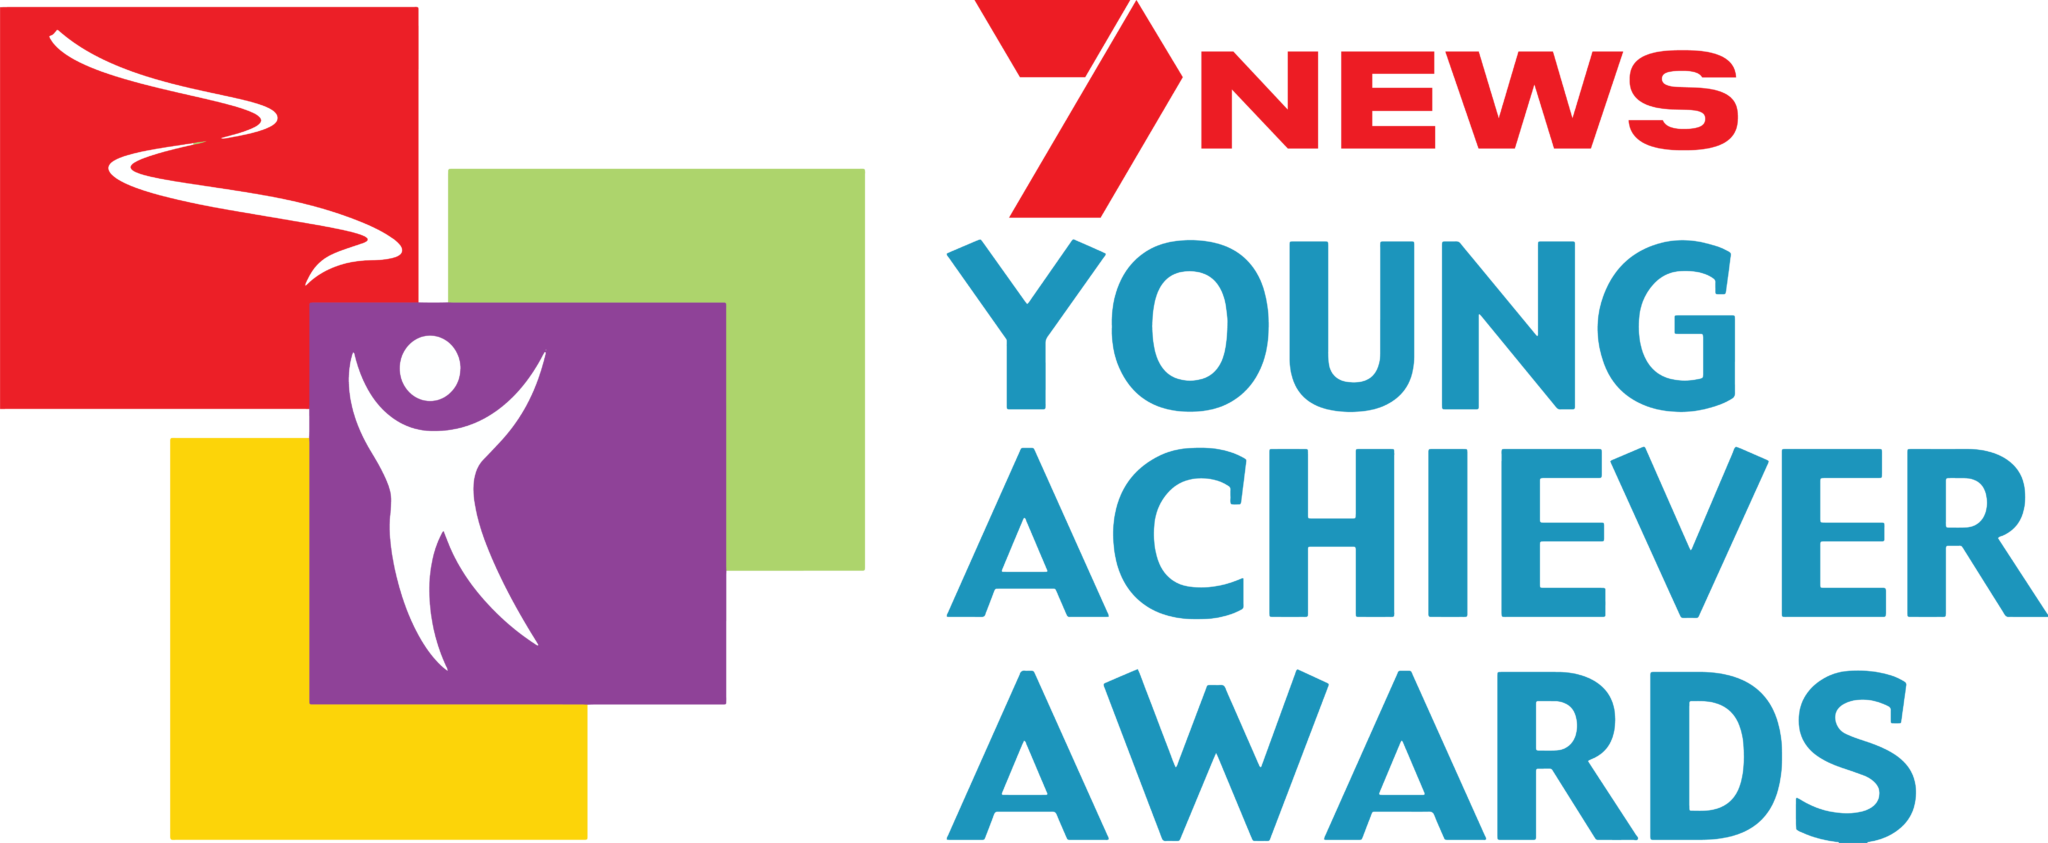 Young Achiever Awards Awards Australia